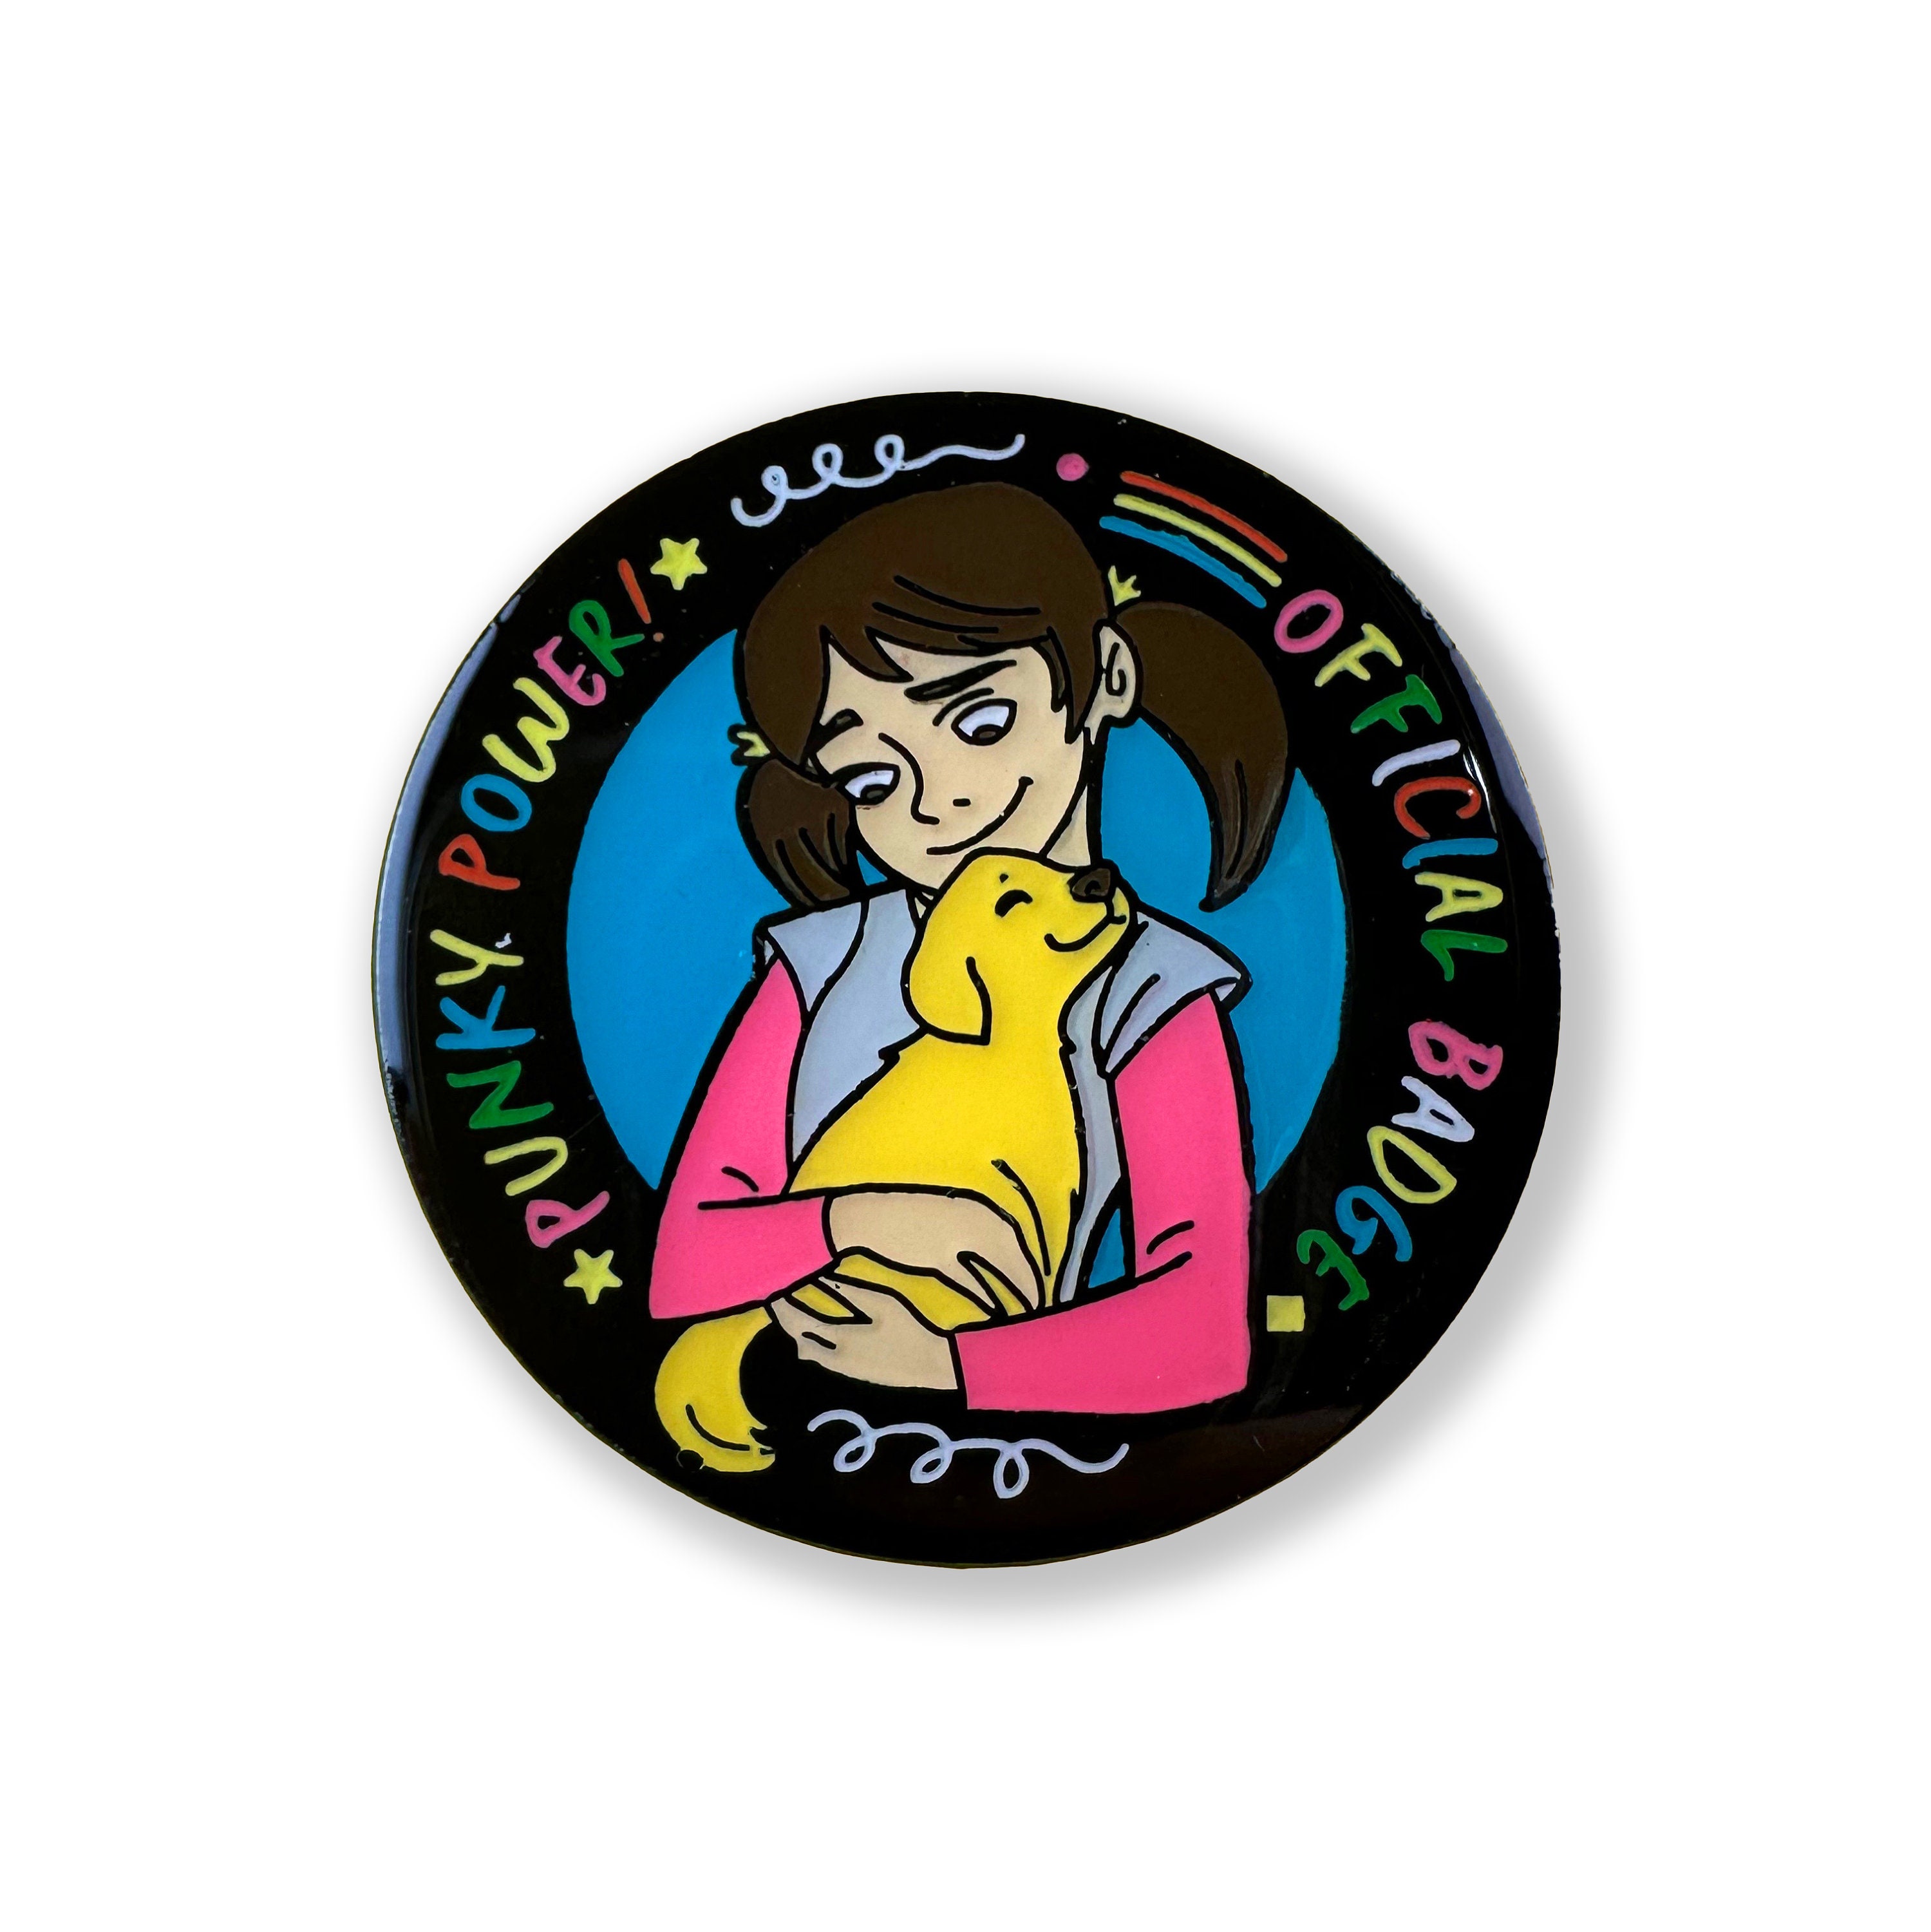 Rainbow Brite and Friends Enamel Pin - 80s Cartoon Nostalgia - Lapel Badge